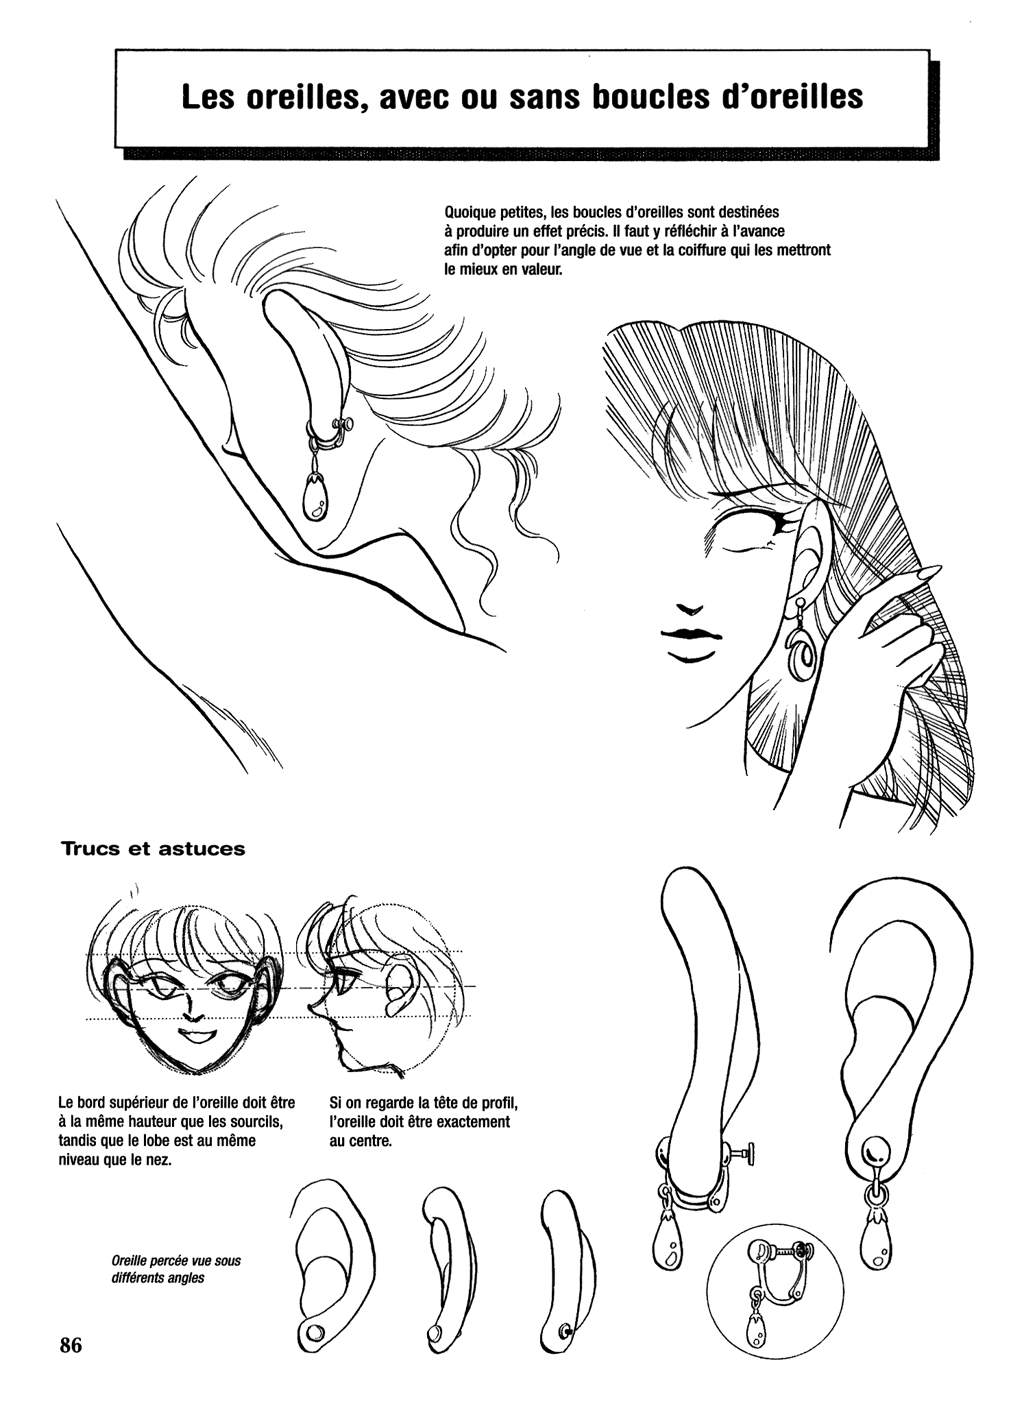 Le dessin du Manga 04 - Personnages feminin, Attitudes, Expressions numero d'image 86